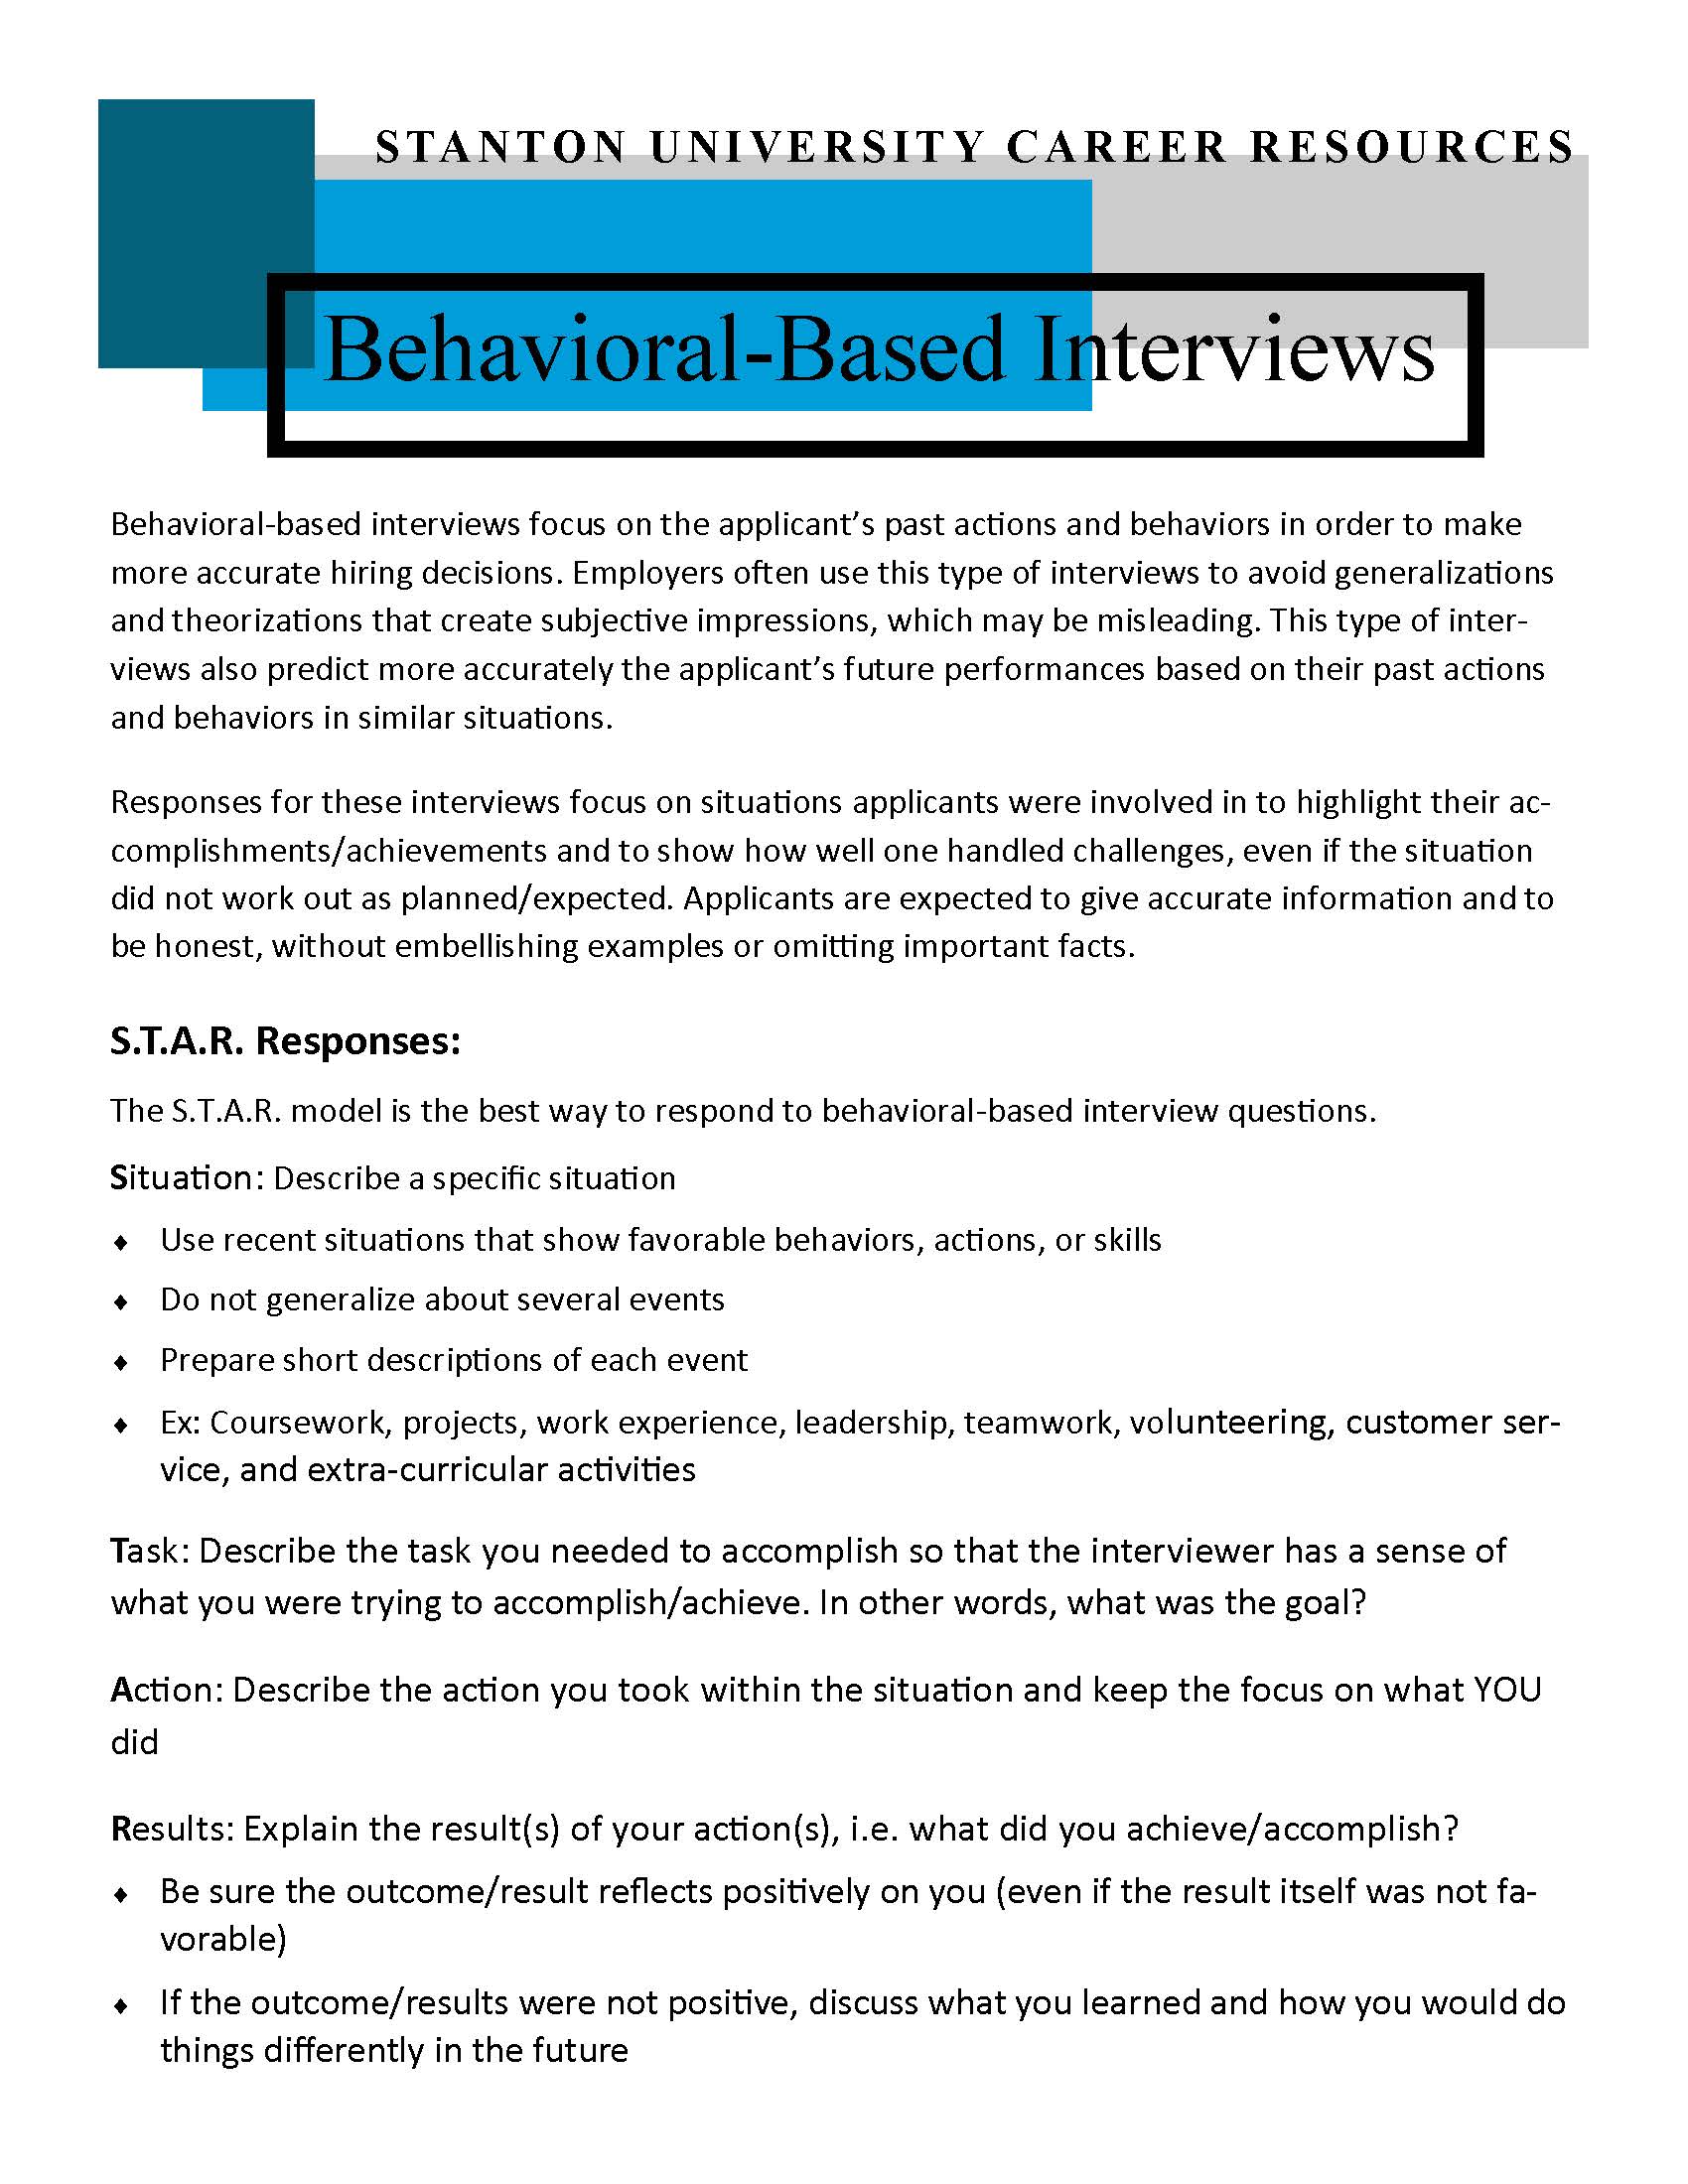  behavioral-based-interview_Page_1.jpg 